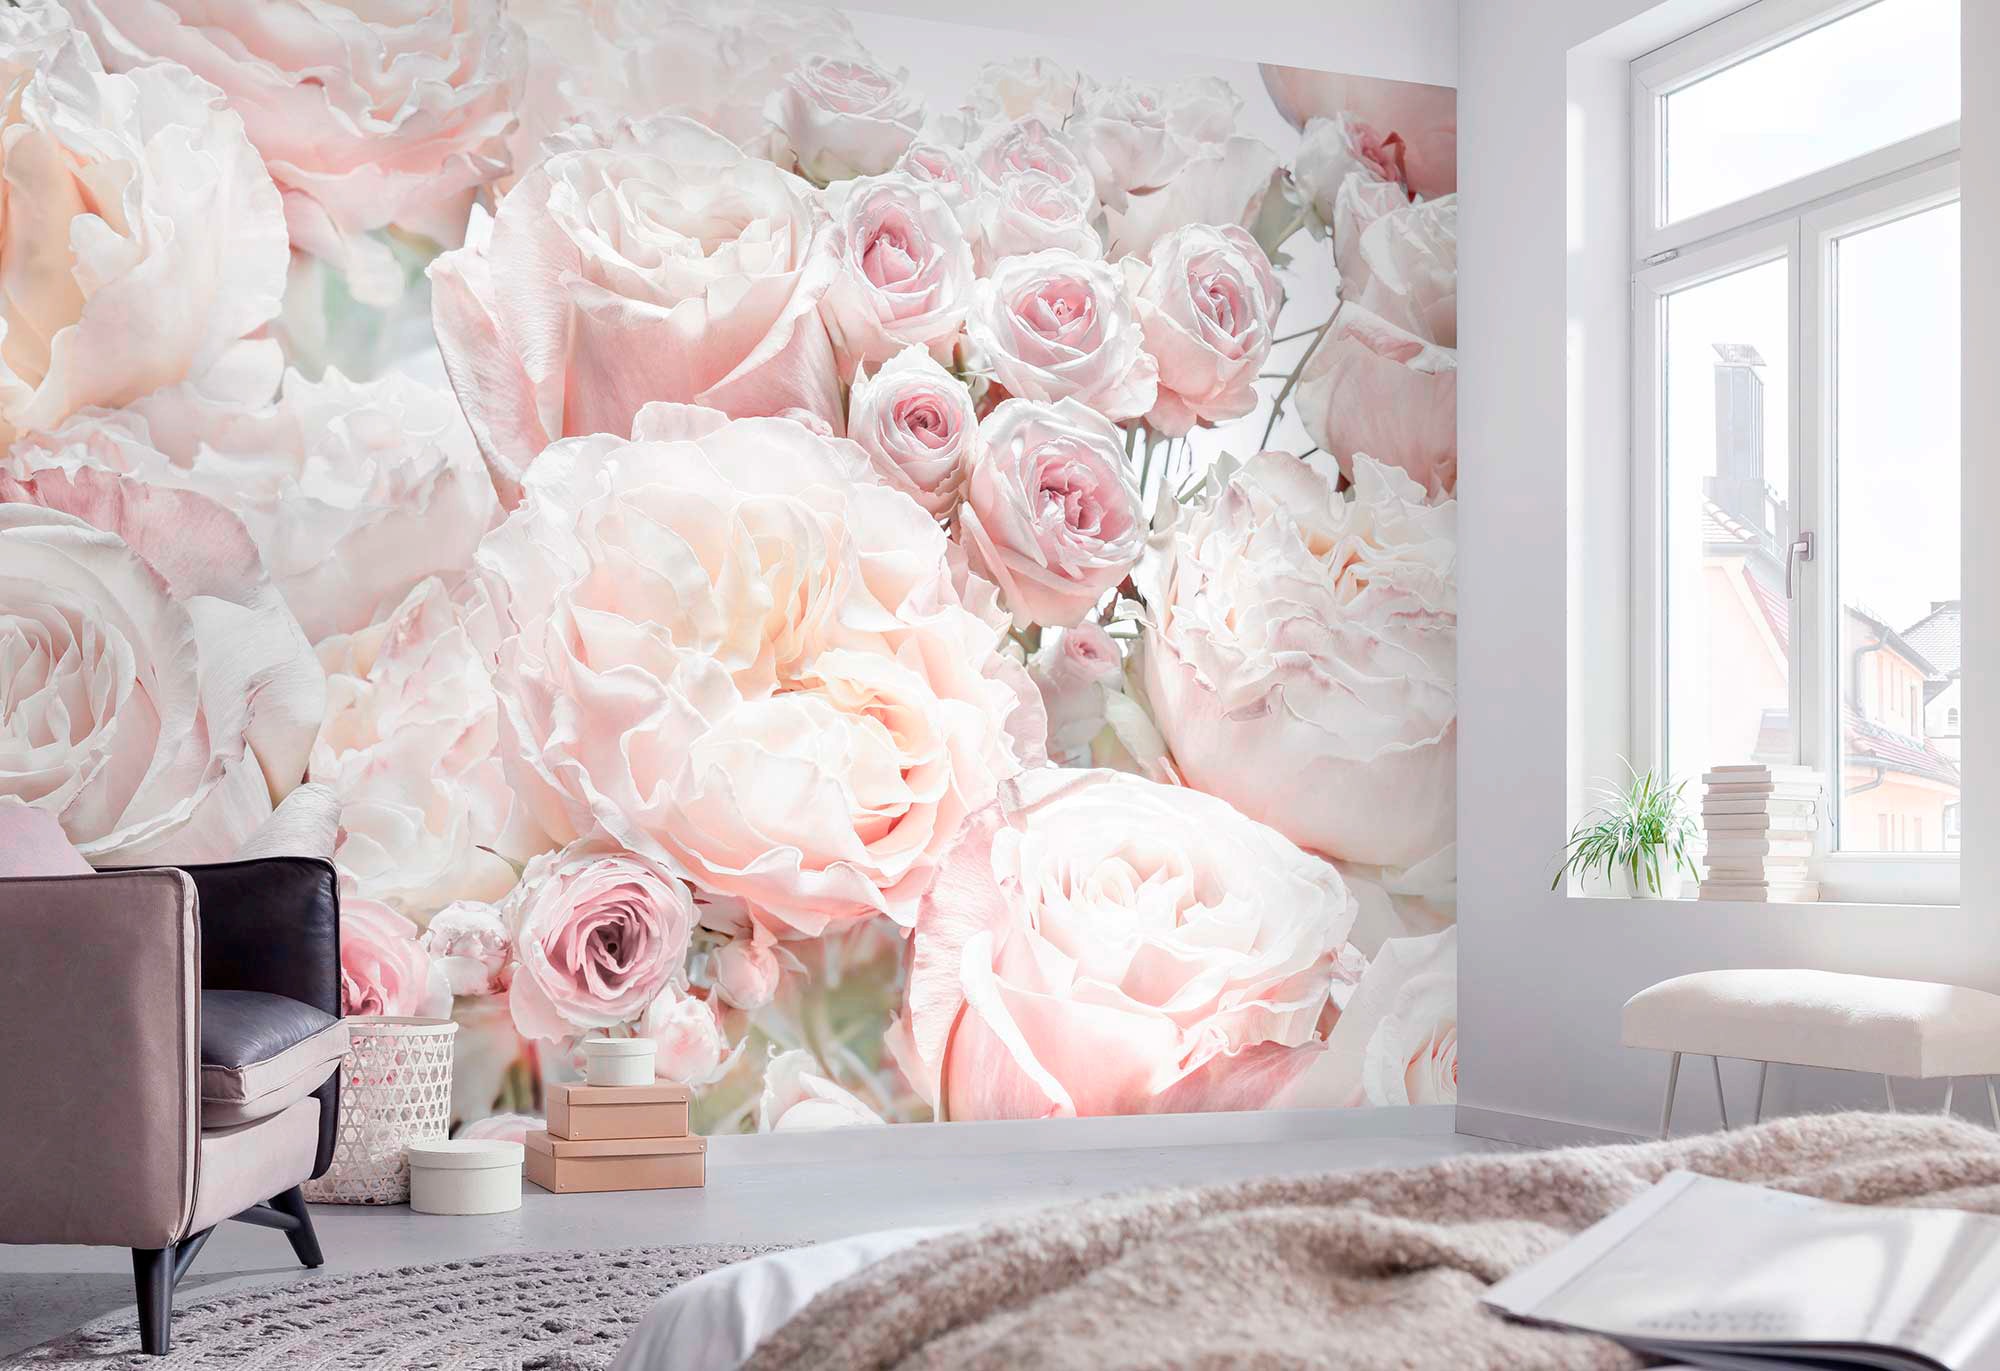 Fototapete »Spring Roses«, 368x254 cm (Breite x Höhe), inklusive Kleister